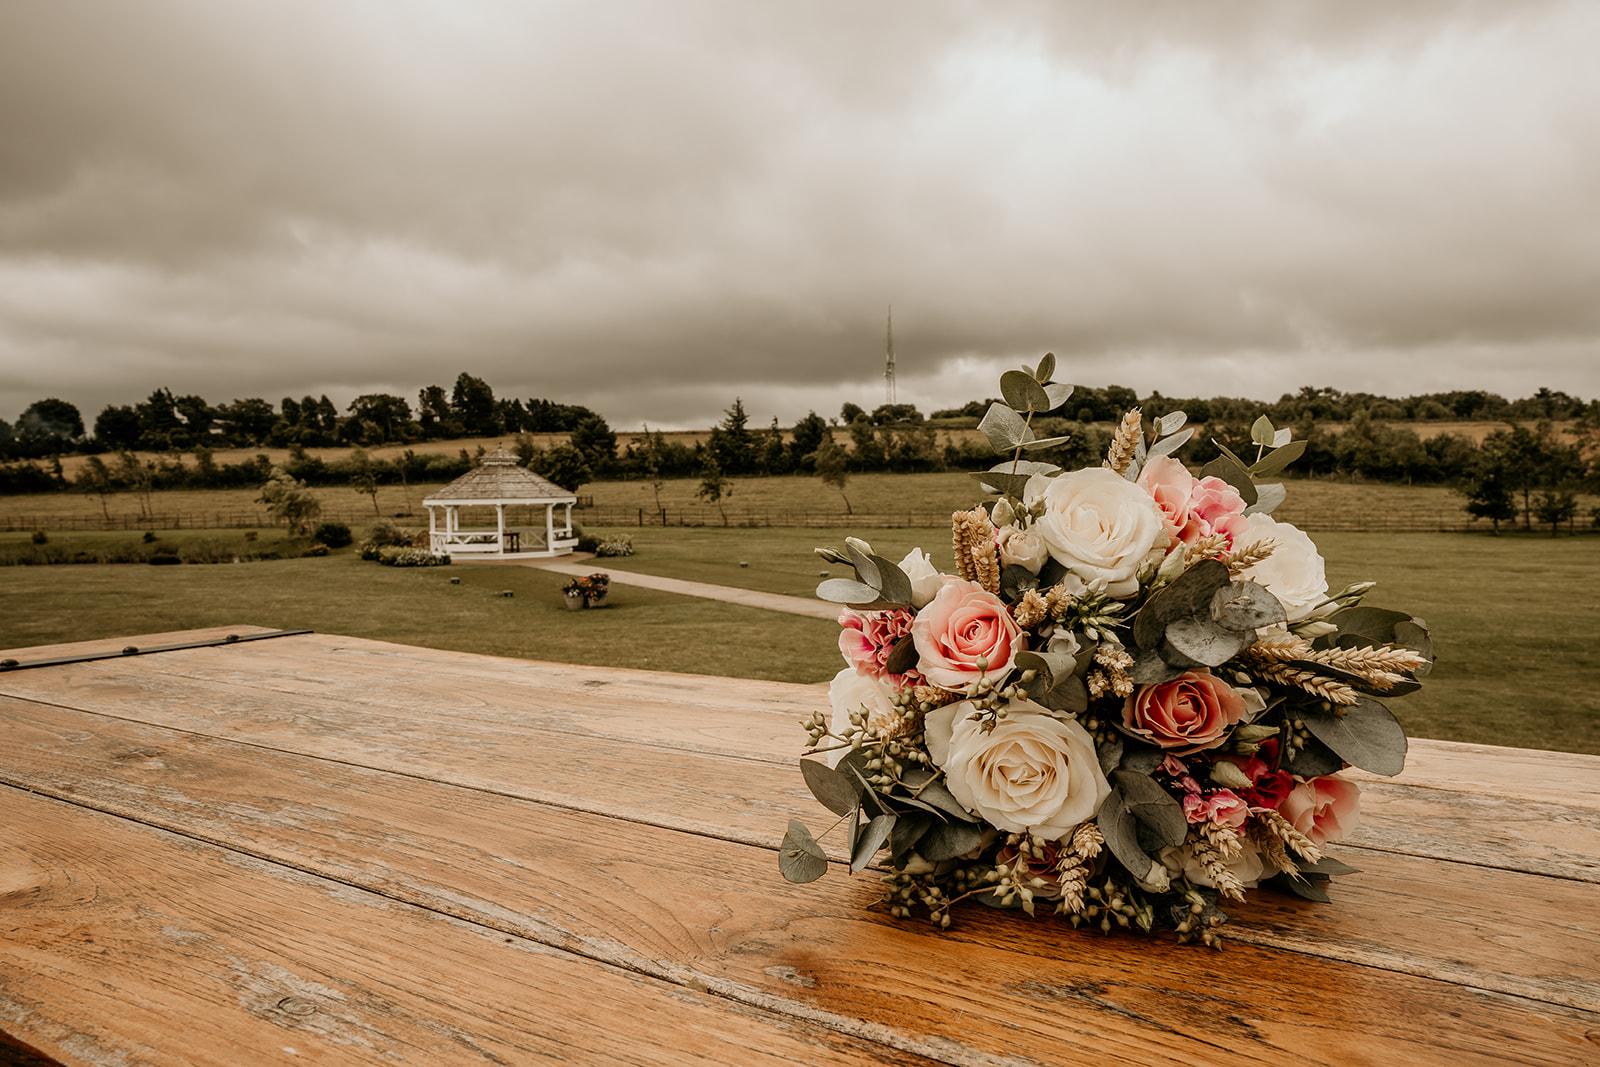 Peak edge hotel grounds and wedding flowers